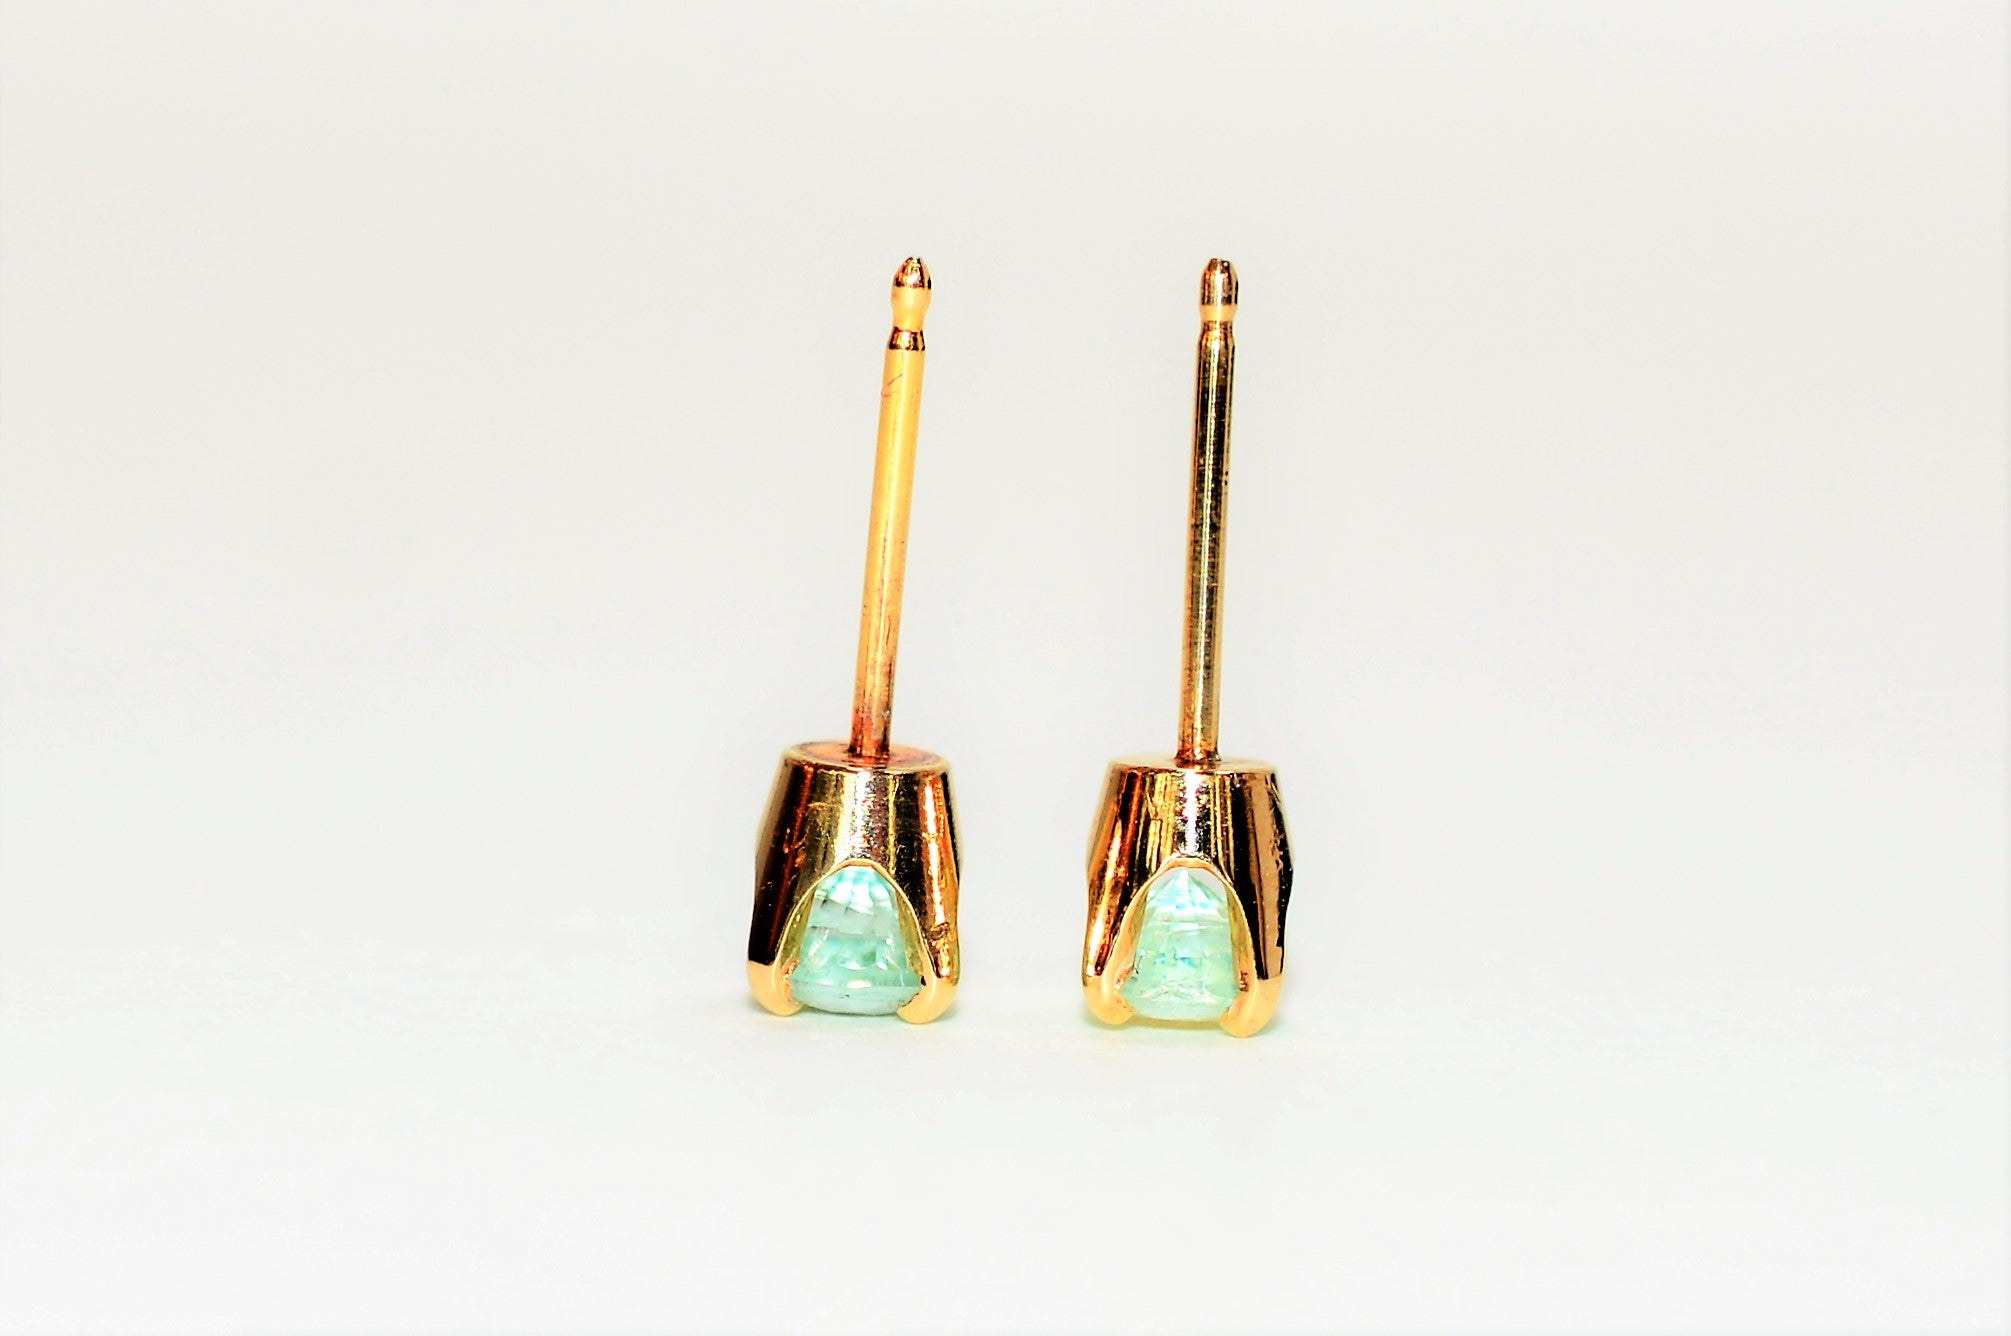 Natural Paraiba Tourmaline Earrings 14K Solid Gold .48tcw Solitaire Earrings Birthstone Earrings Stud Earrings Gemstone Earrings Blue Green